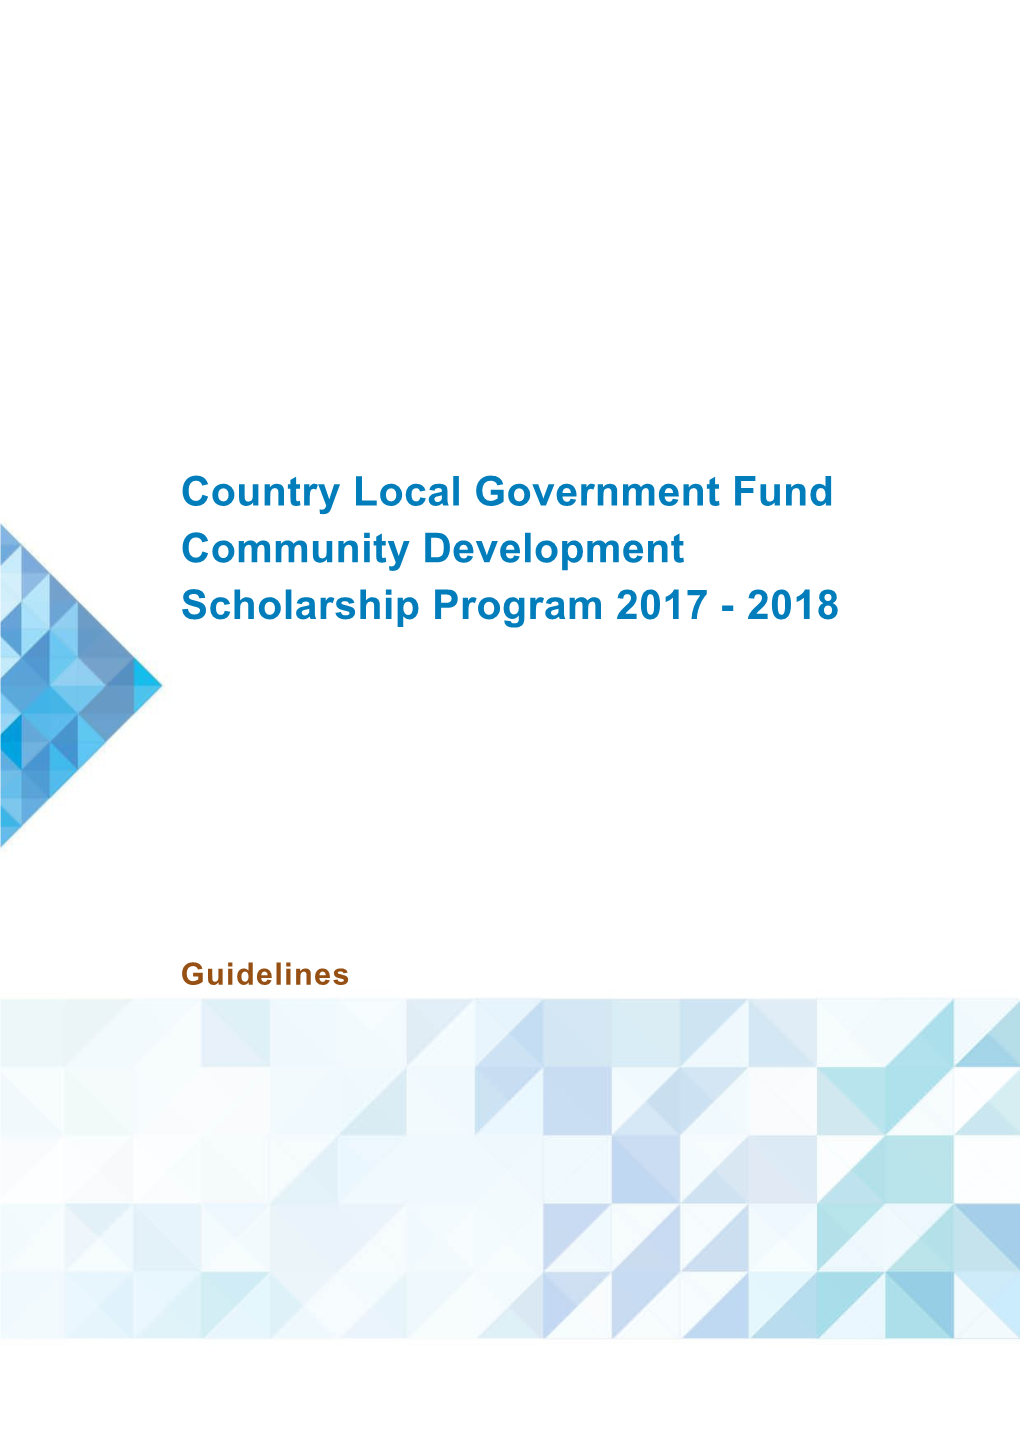 CLGF Community Development Scholarship Program Guidelines